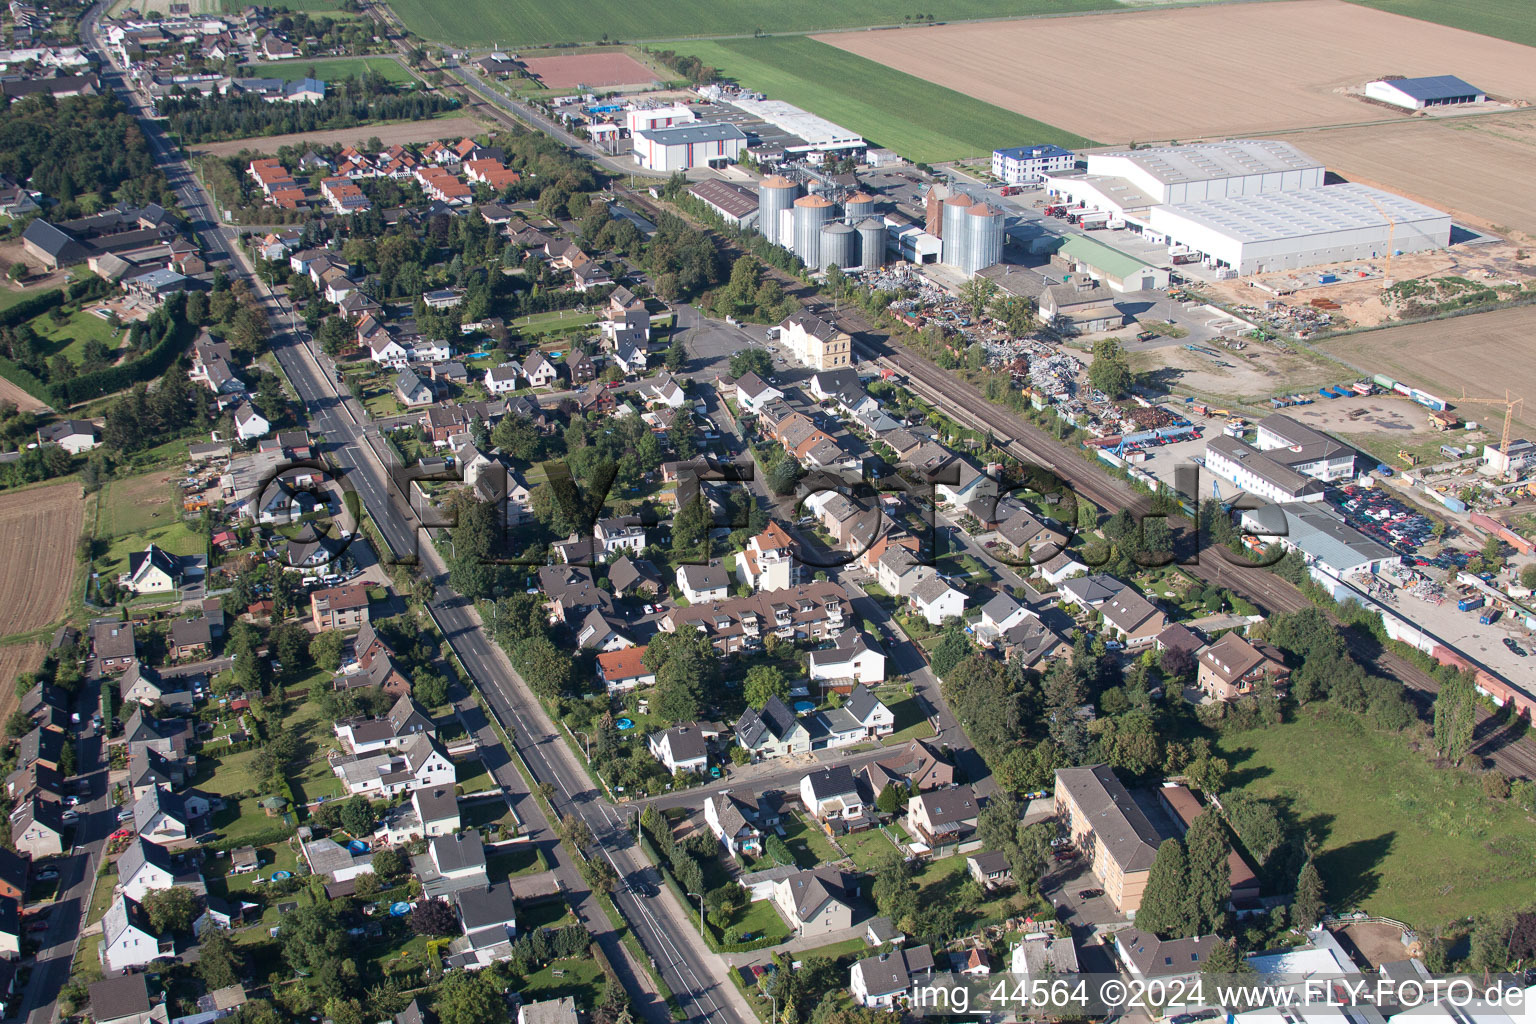 Aerial view of Derkum in the state North Rhine-Westphalia, Germany